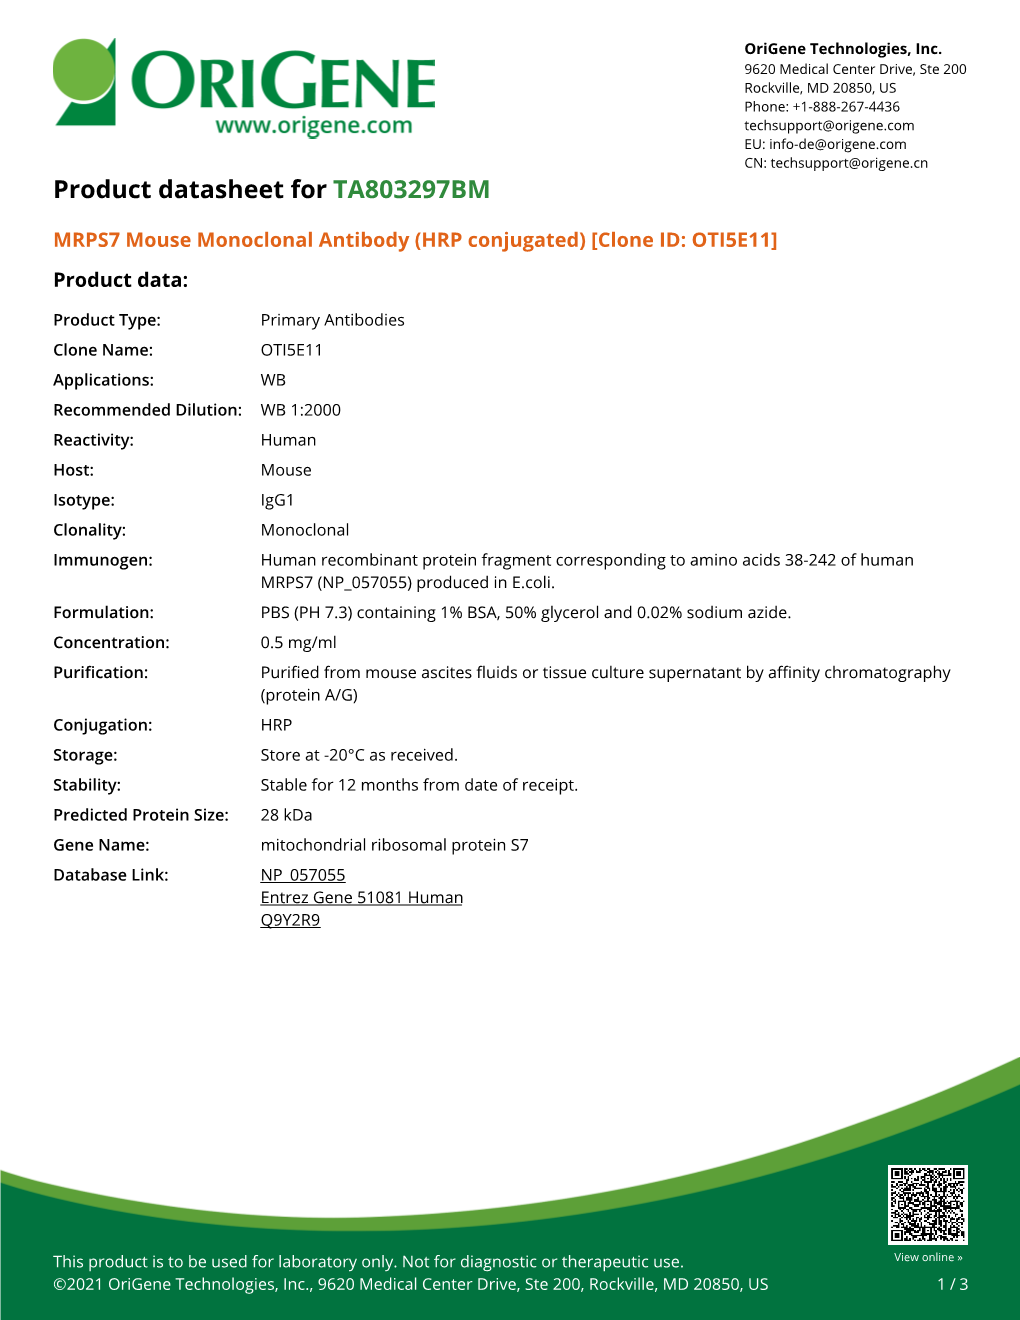 MRPS7 Mouse Monoclonal Antibody (HRP Conjugated) [Clone ID: OTI5E11] Product Data